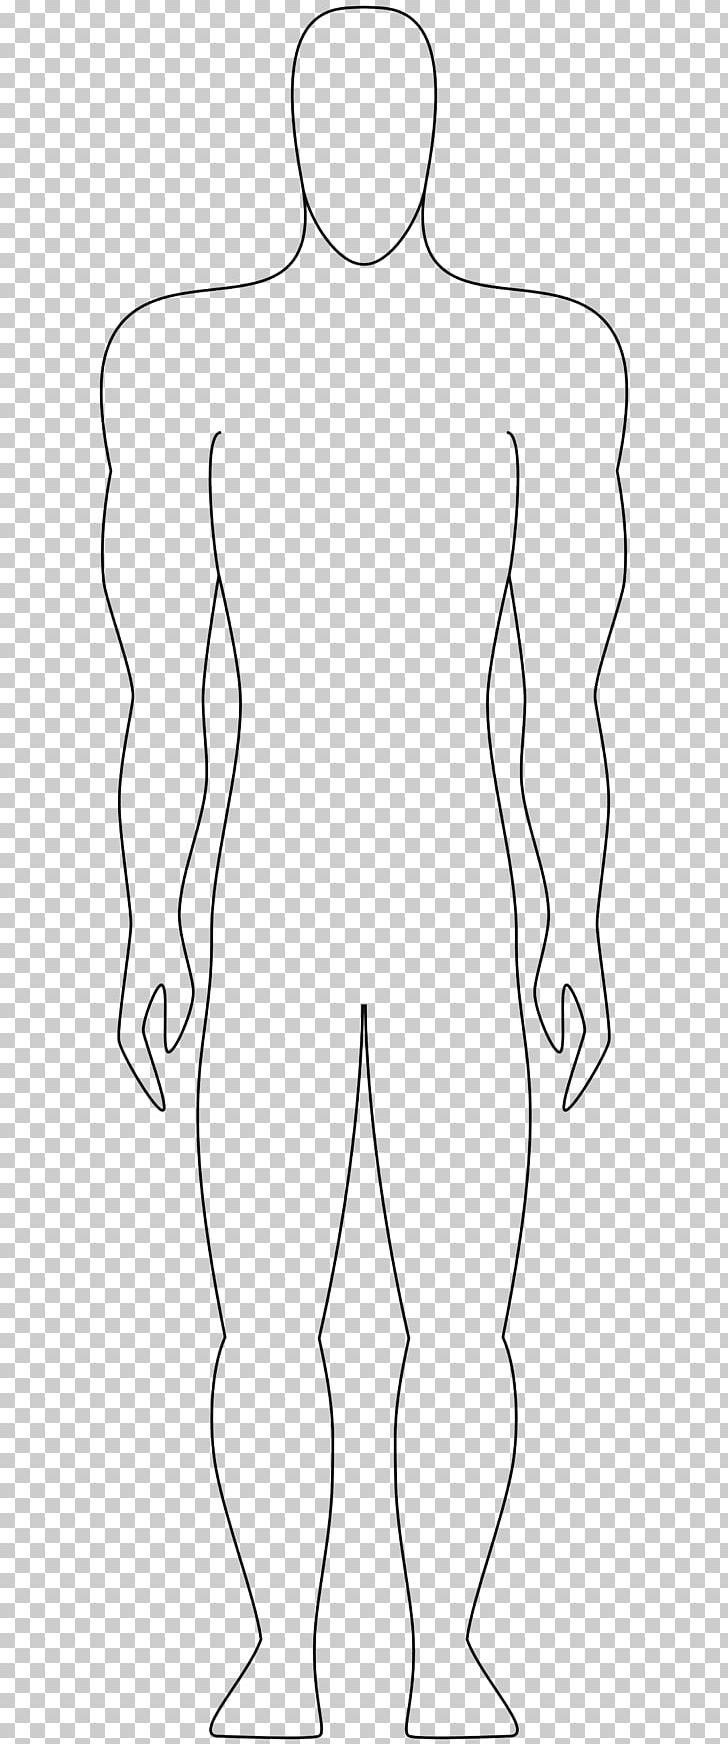 Human body artistic anatomy drawing side view  Stock Illustration  83465874  PIXTA